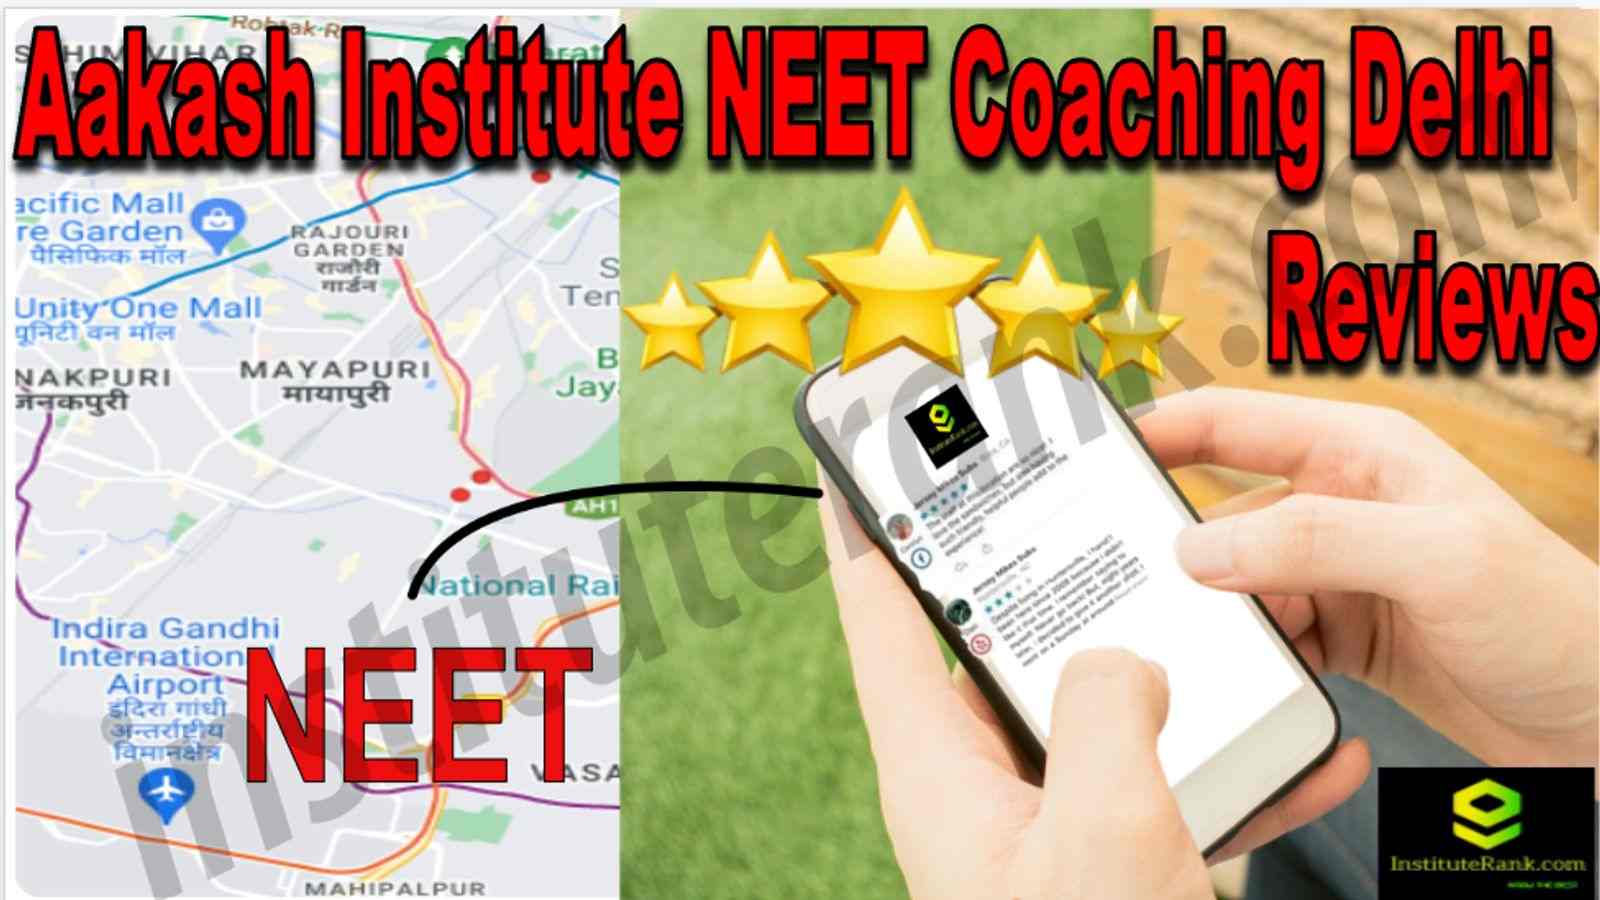 Aakash Institute Neet Coaching Delhi Reviews